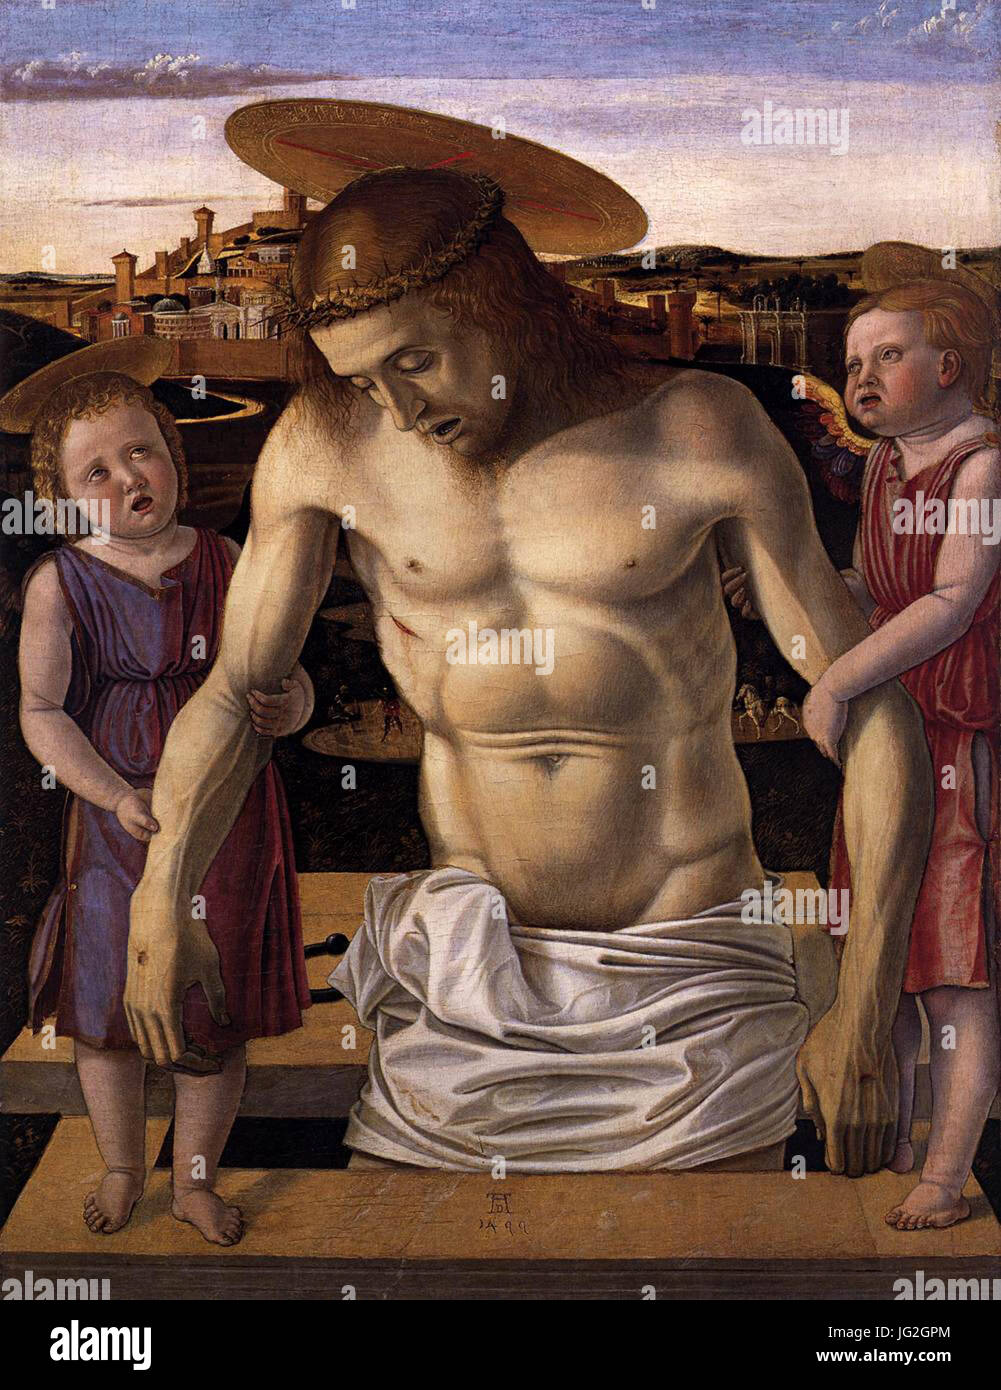 Giovanni Bellini - Dead Christ Supported by Two Angels (Pietà) - WGA01629  Stock Photo - Alamy